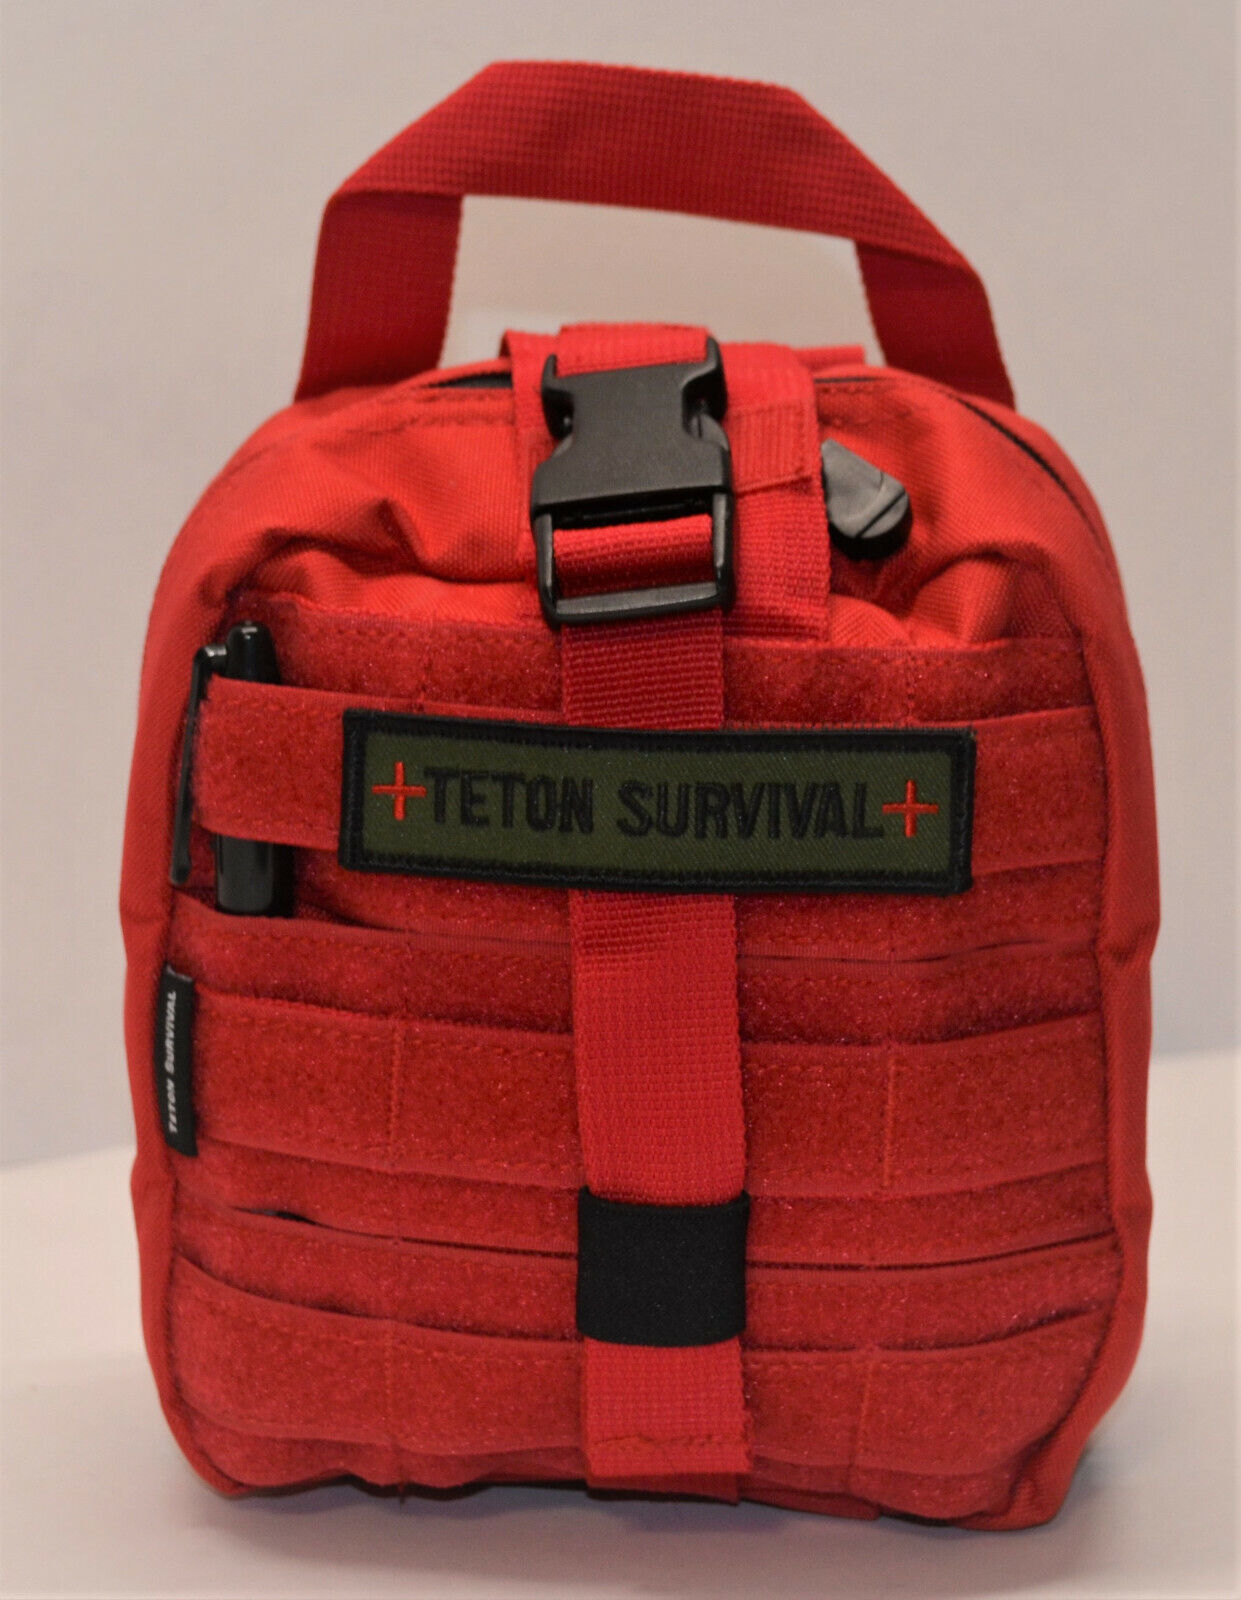 Standard- Medium First Aid Kit (MFAK) Tactical Trauma Survival Bag -  Stocked | eBay